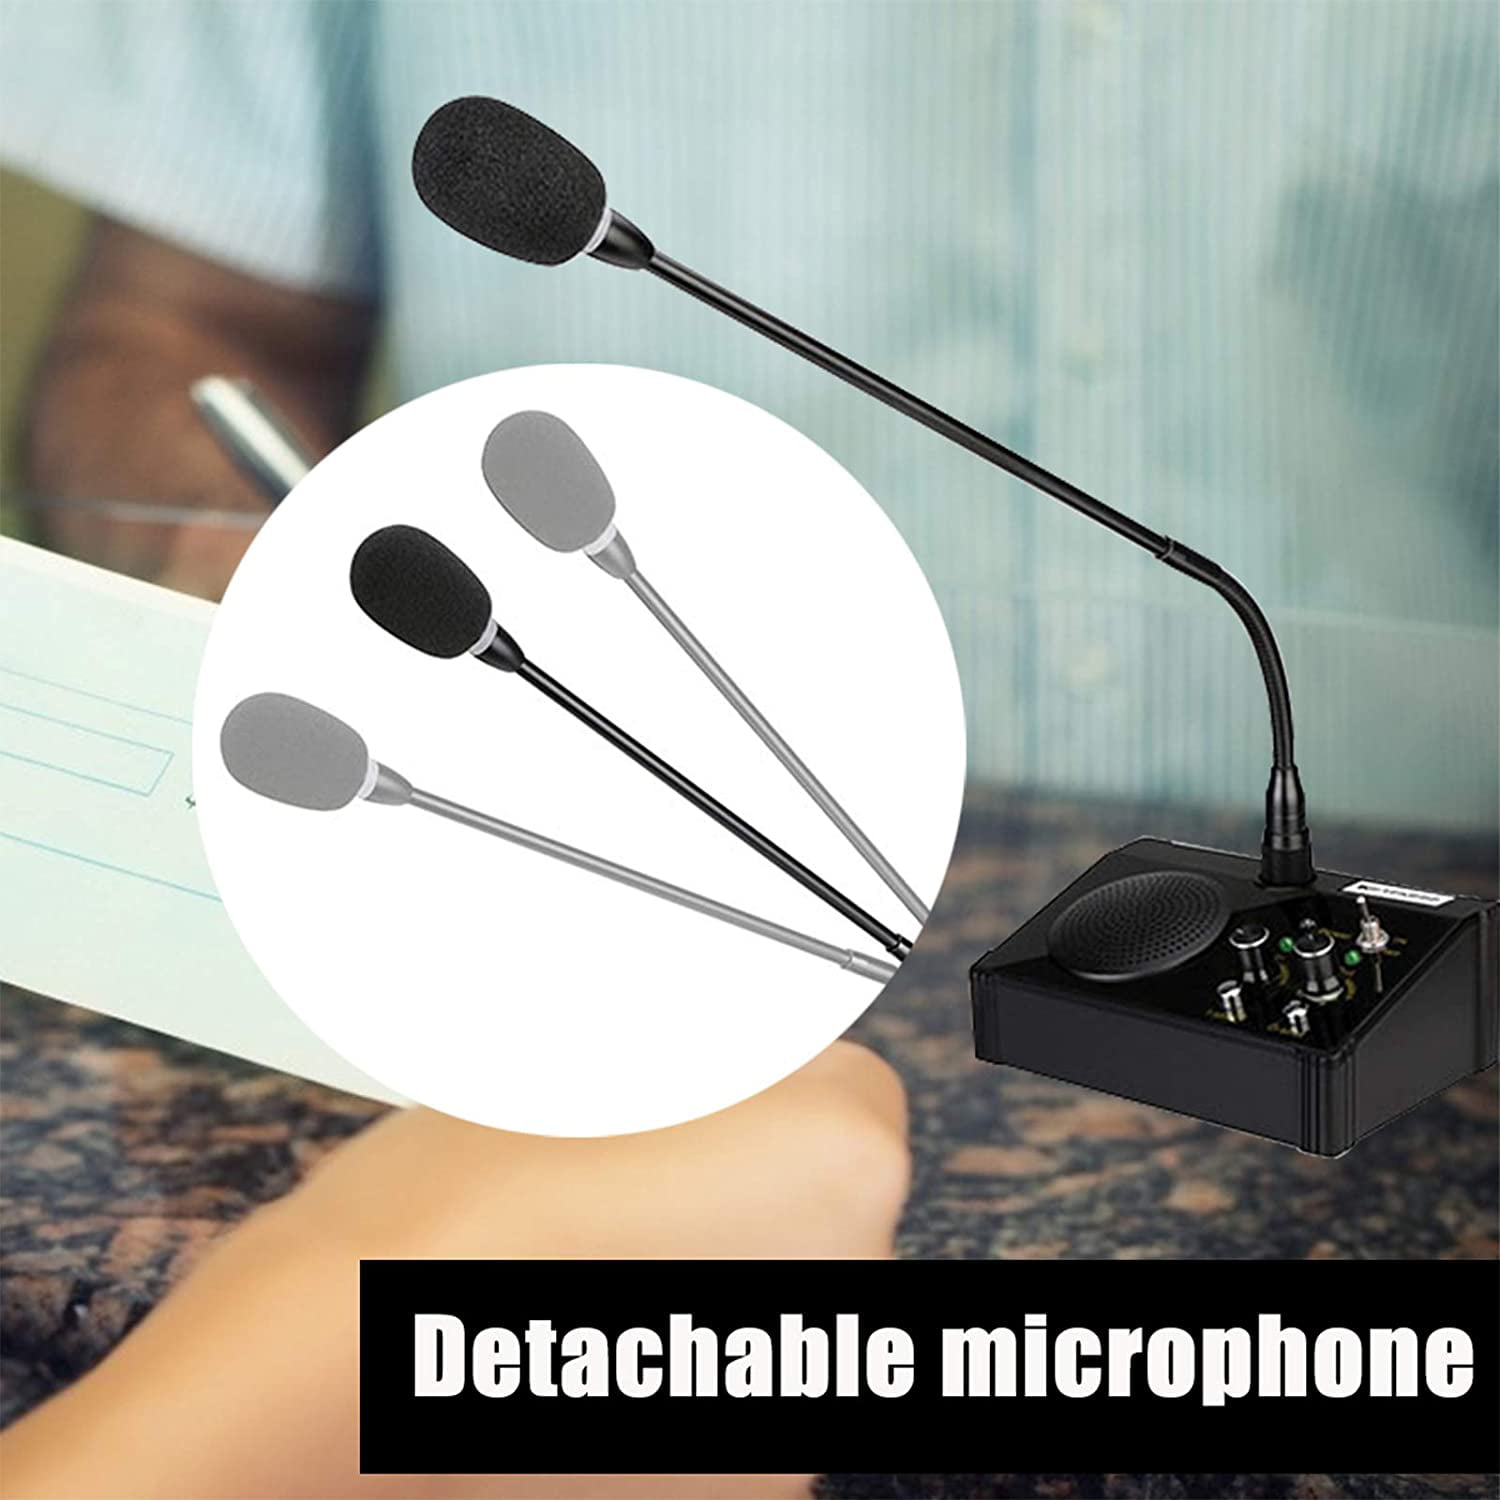 Retekess TW102 Interphone Microphone Tout Métal Système d